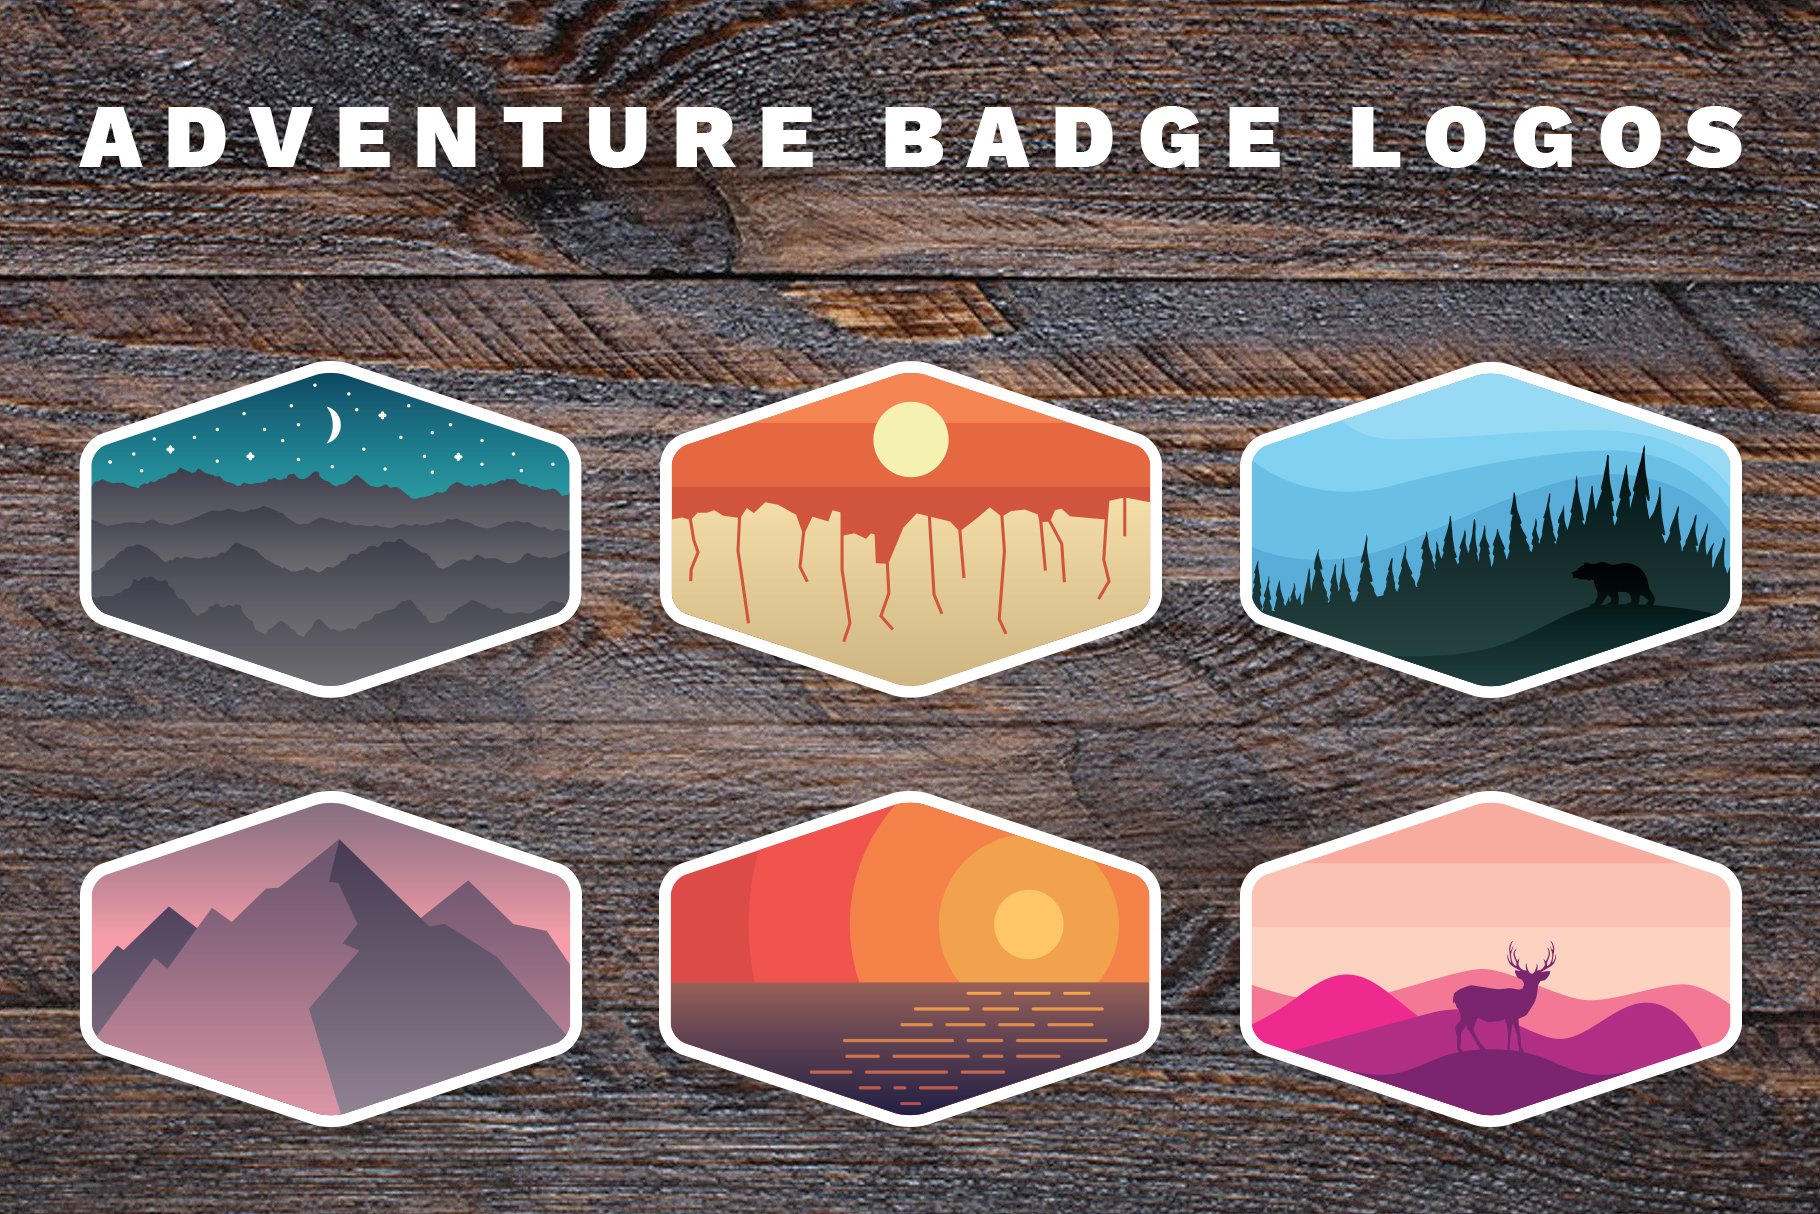 Outdoor Adventure Badge Logos cover image.